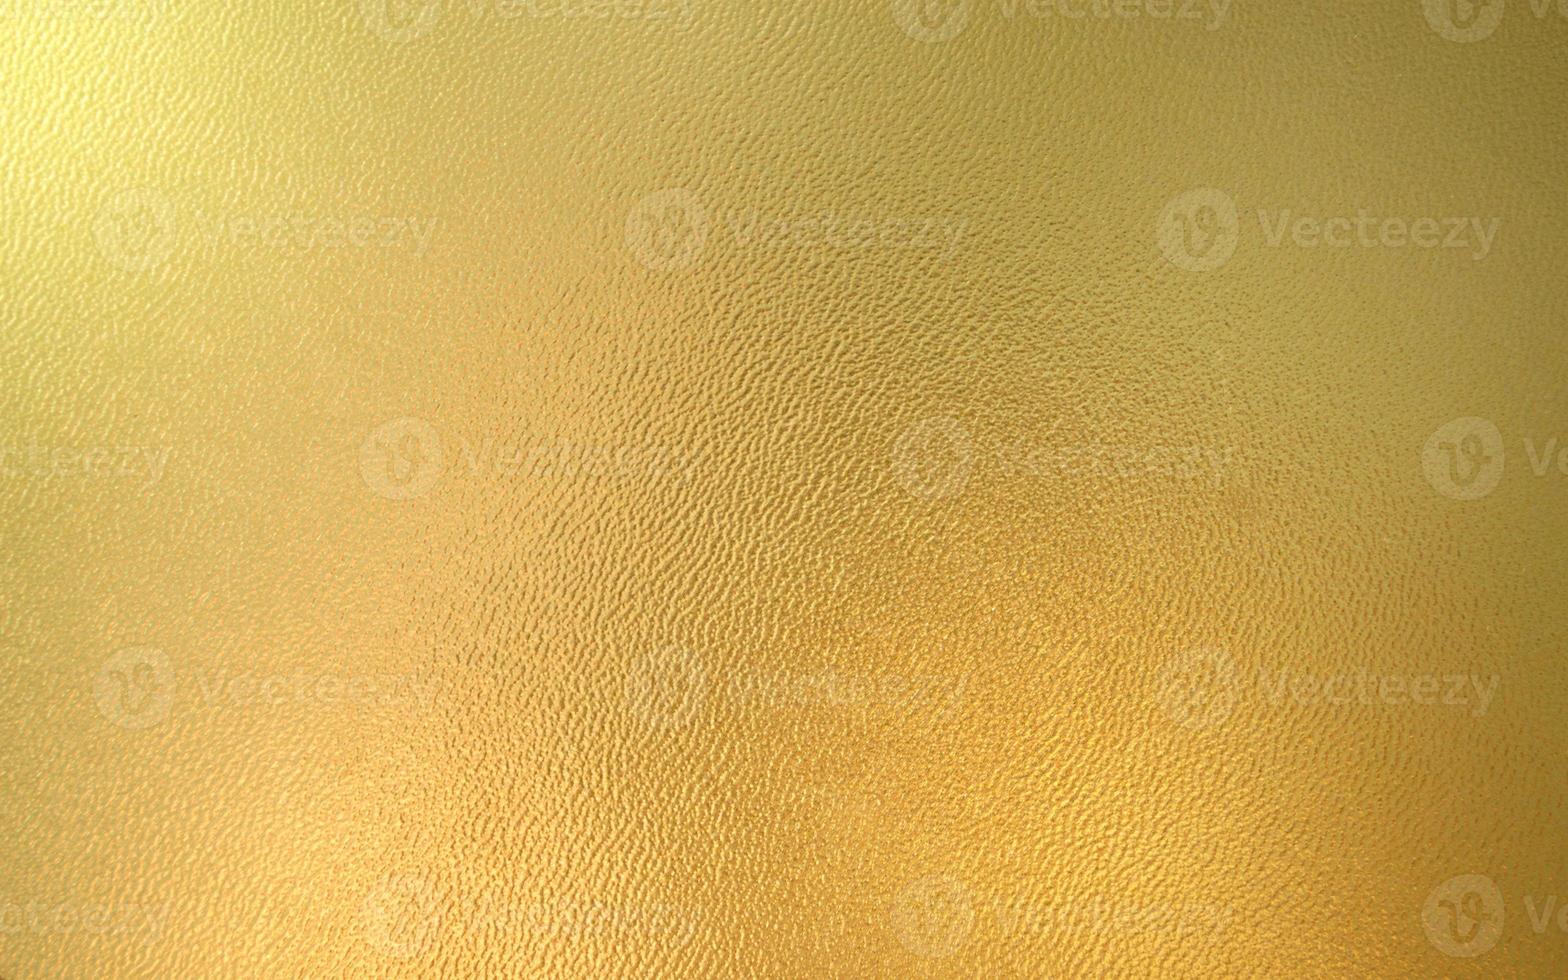 Golden skin texture photo